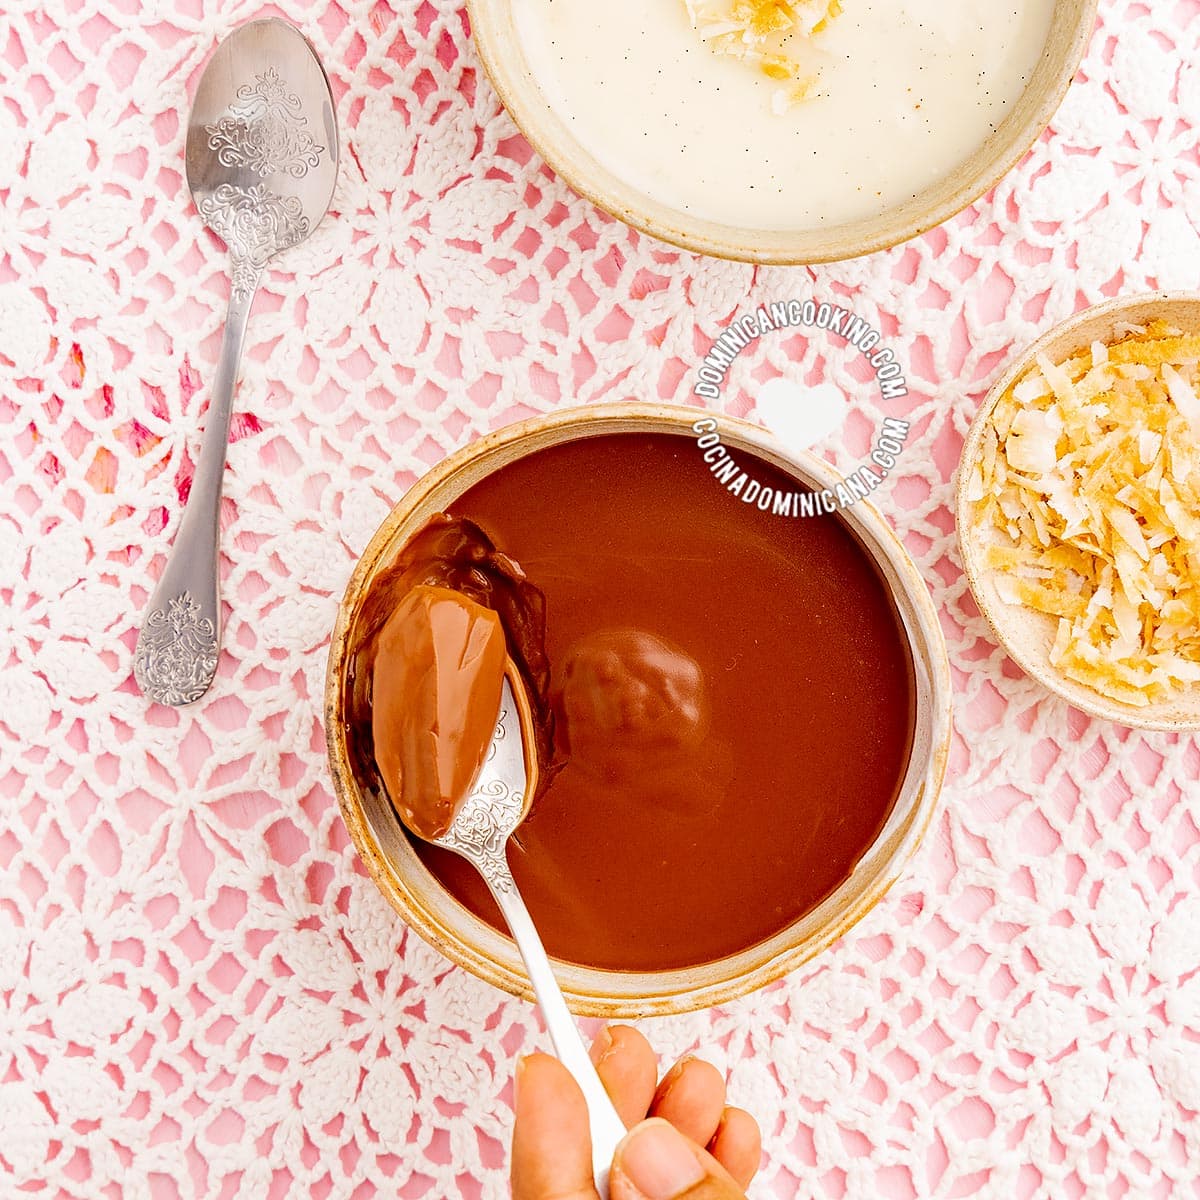 Vanilla and Chocolate Maicena Pudding